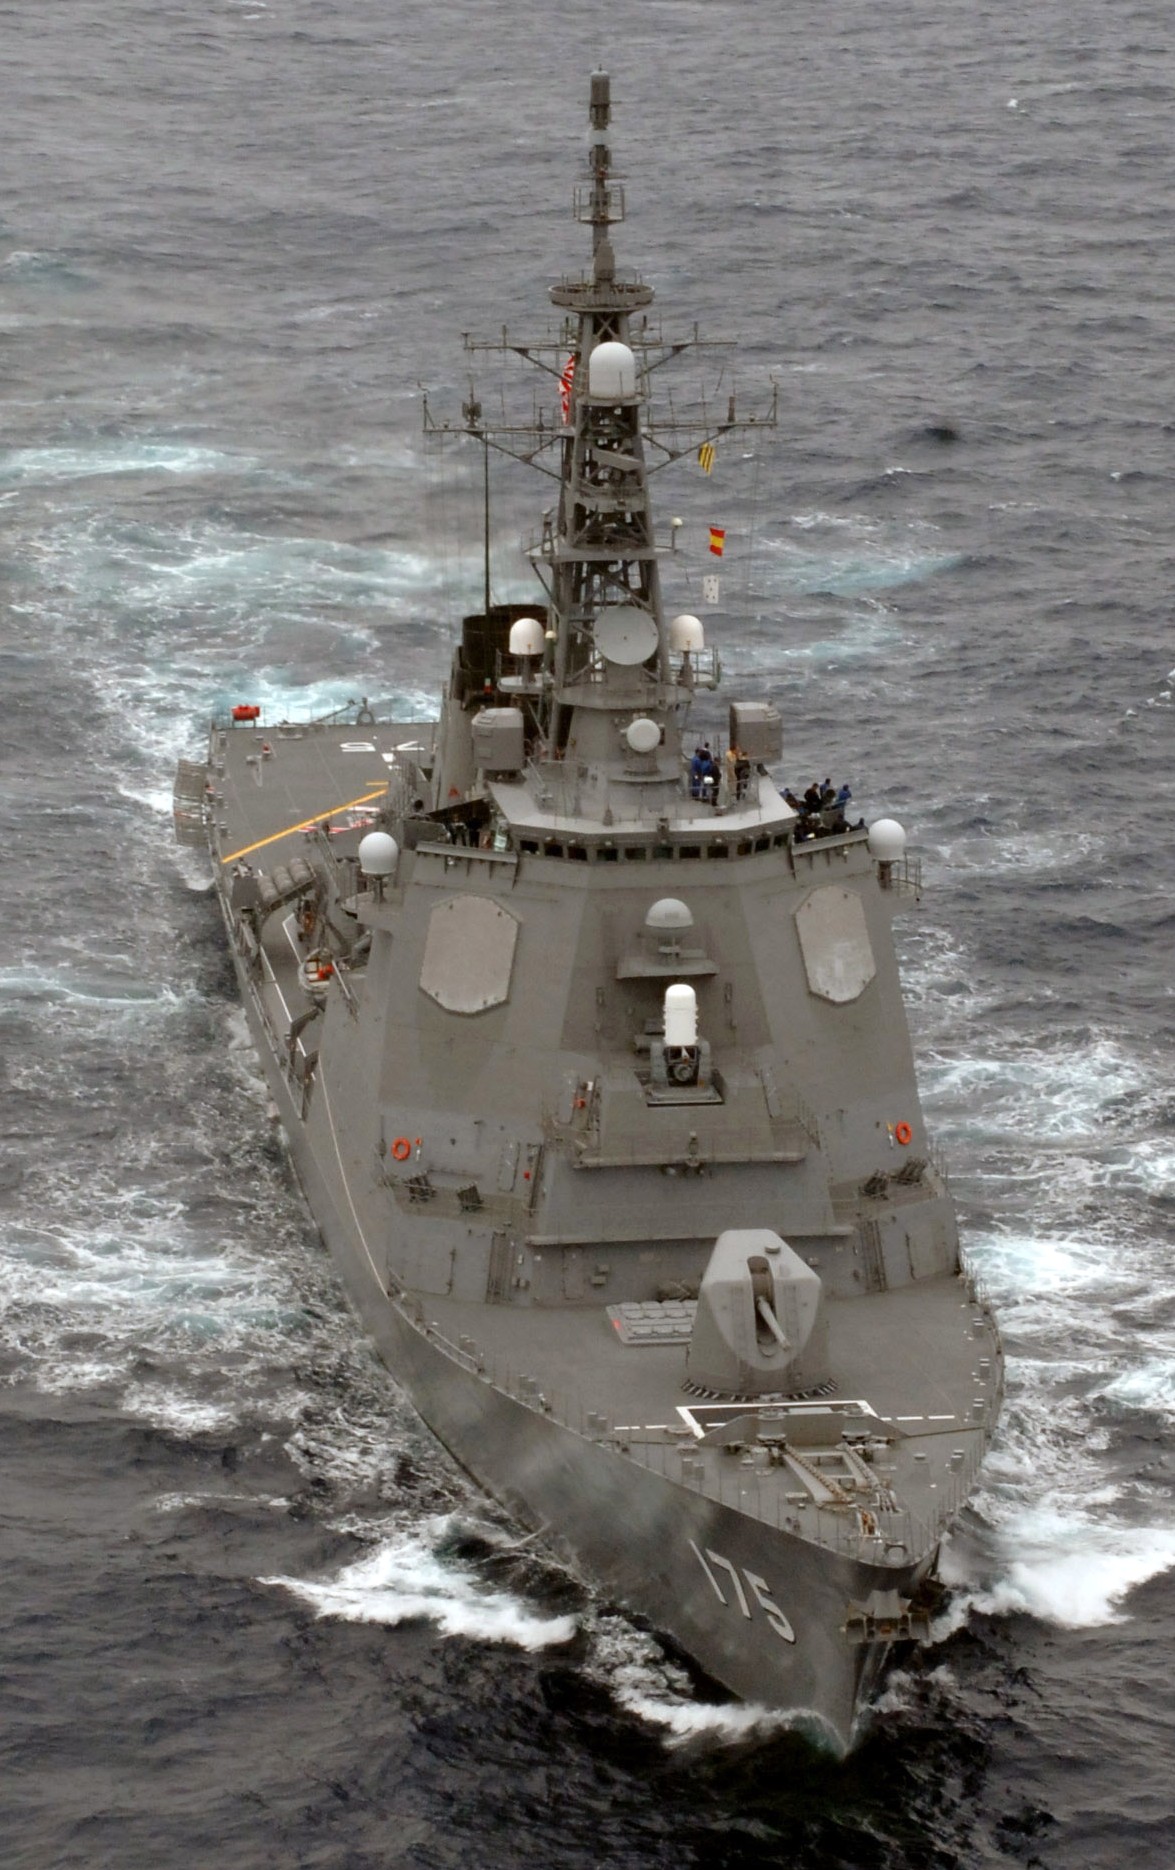 ddg-175 jds myoko kongou class destroyer japan maritime self defense force jmsdf 25